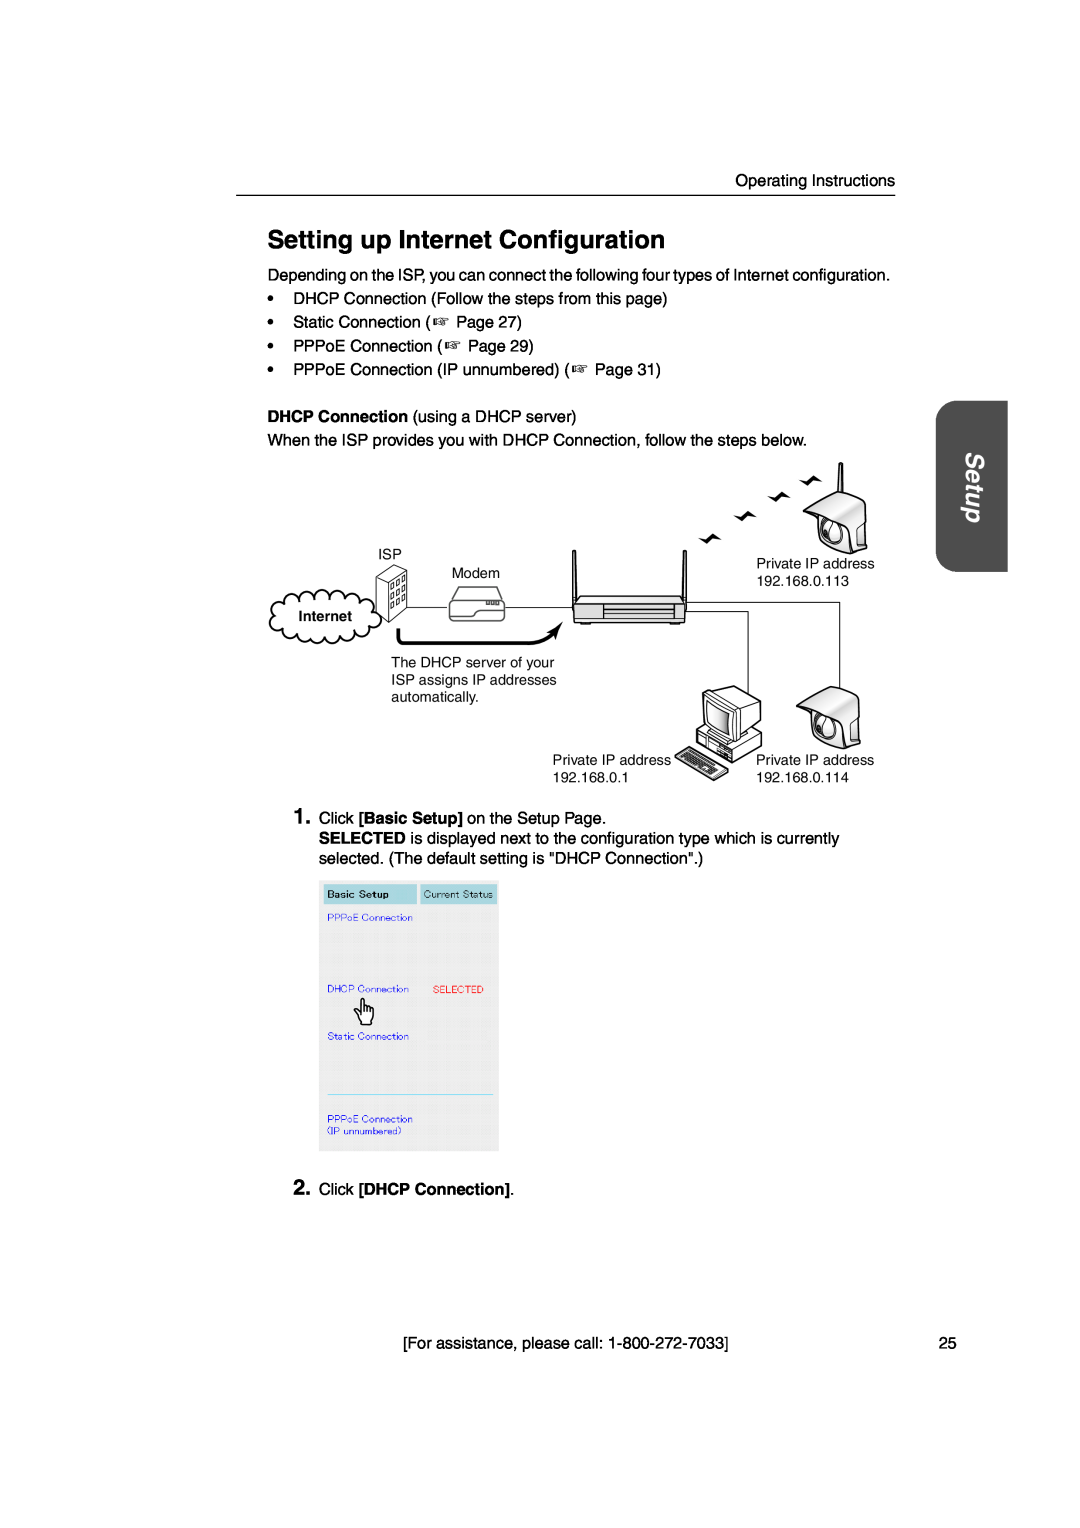 Panasonic KX-HGW600 manual Setting up Internet Configuration, Setup, Click DHCP Connection 